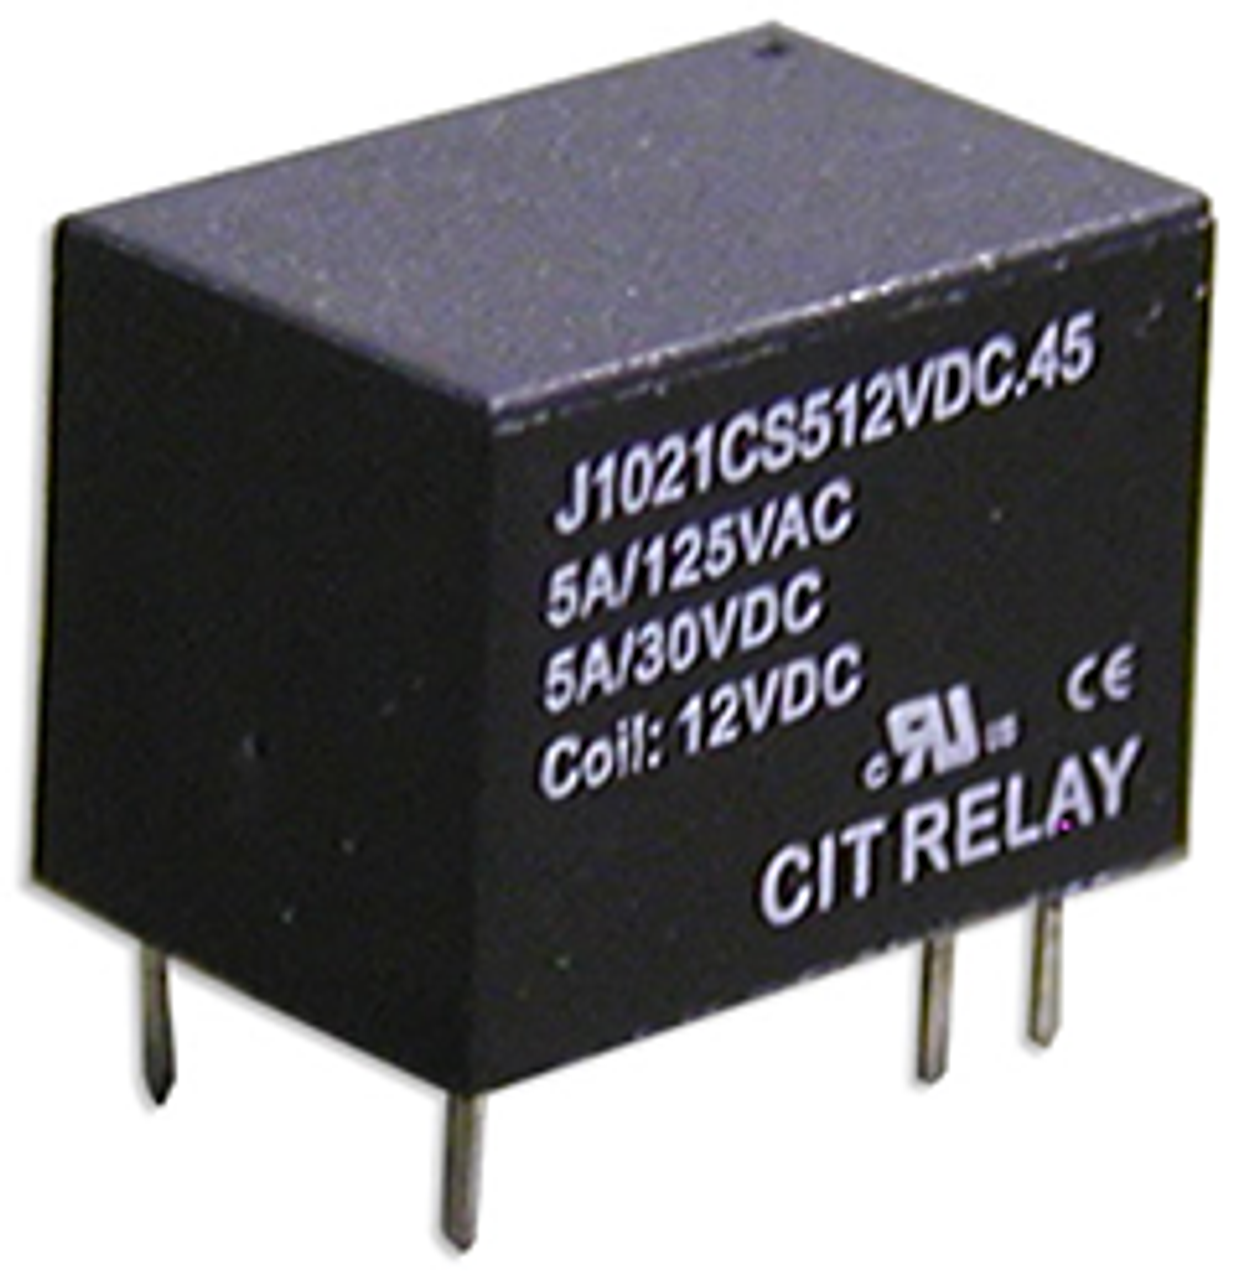 CIT Relay and Switch J1021CS3P3VDC.45 Power Relays